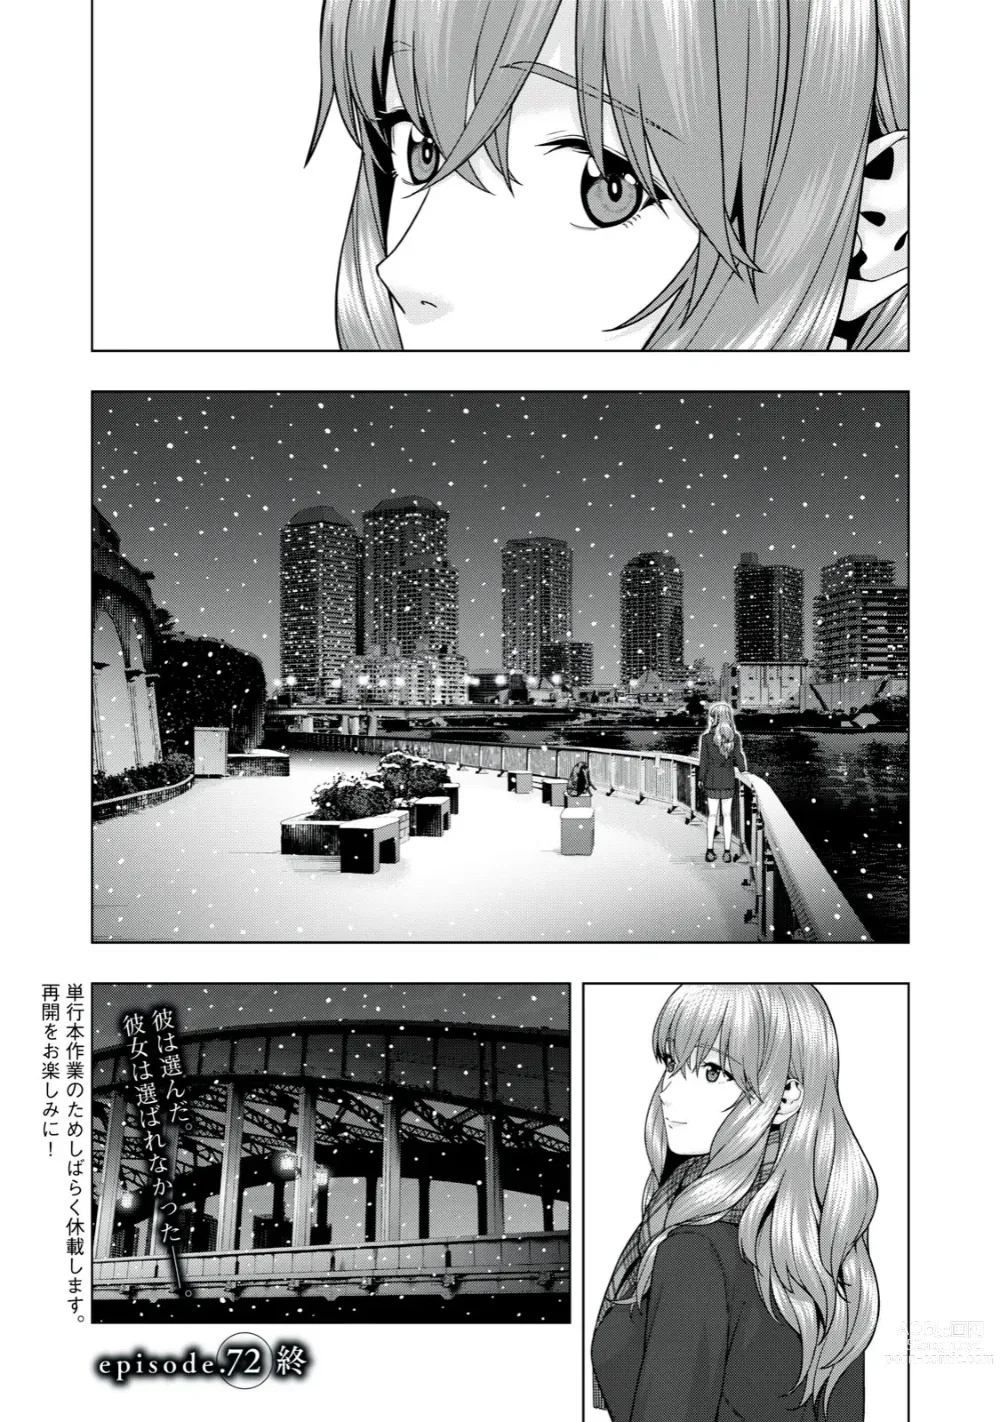 Page 594 of manga Kanojo no Tomodachi